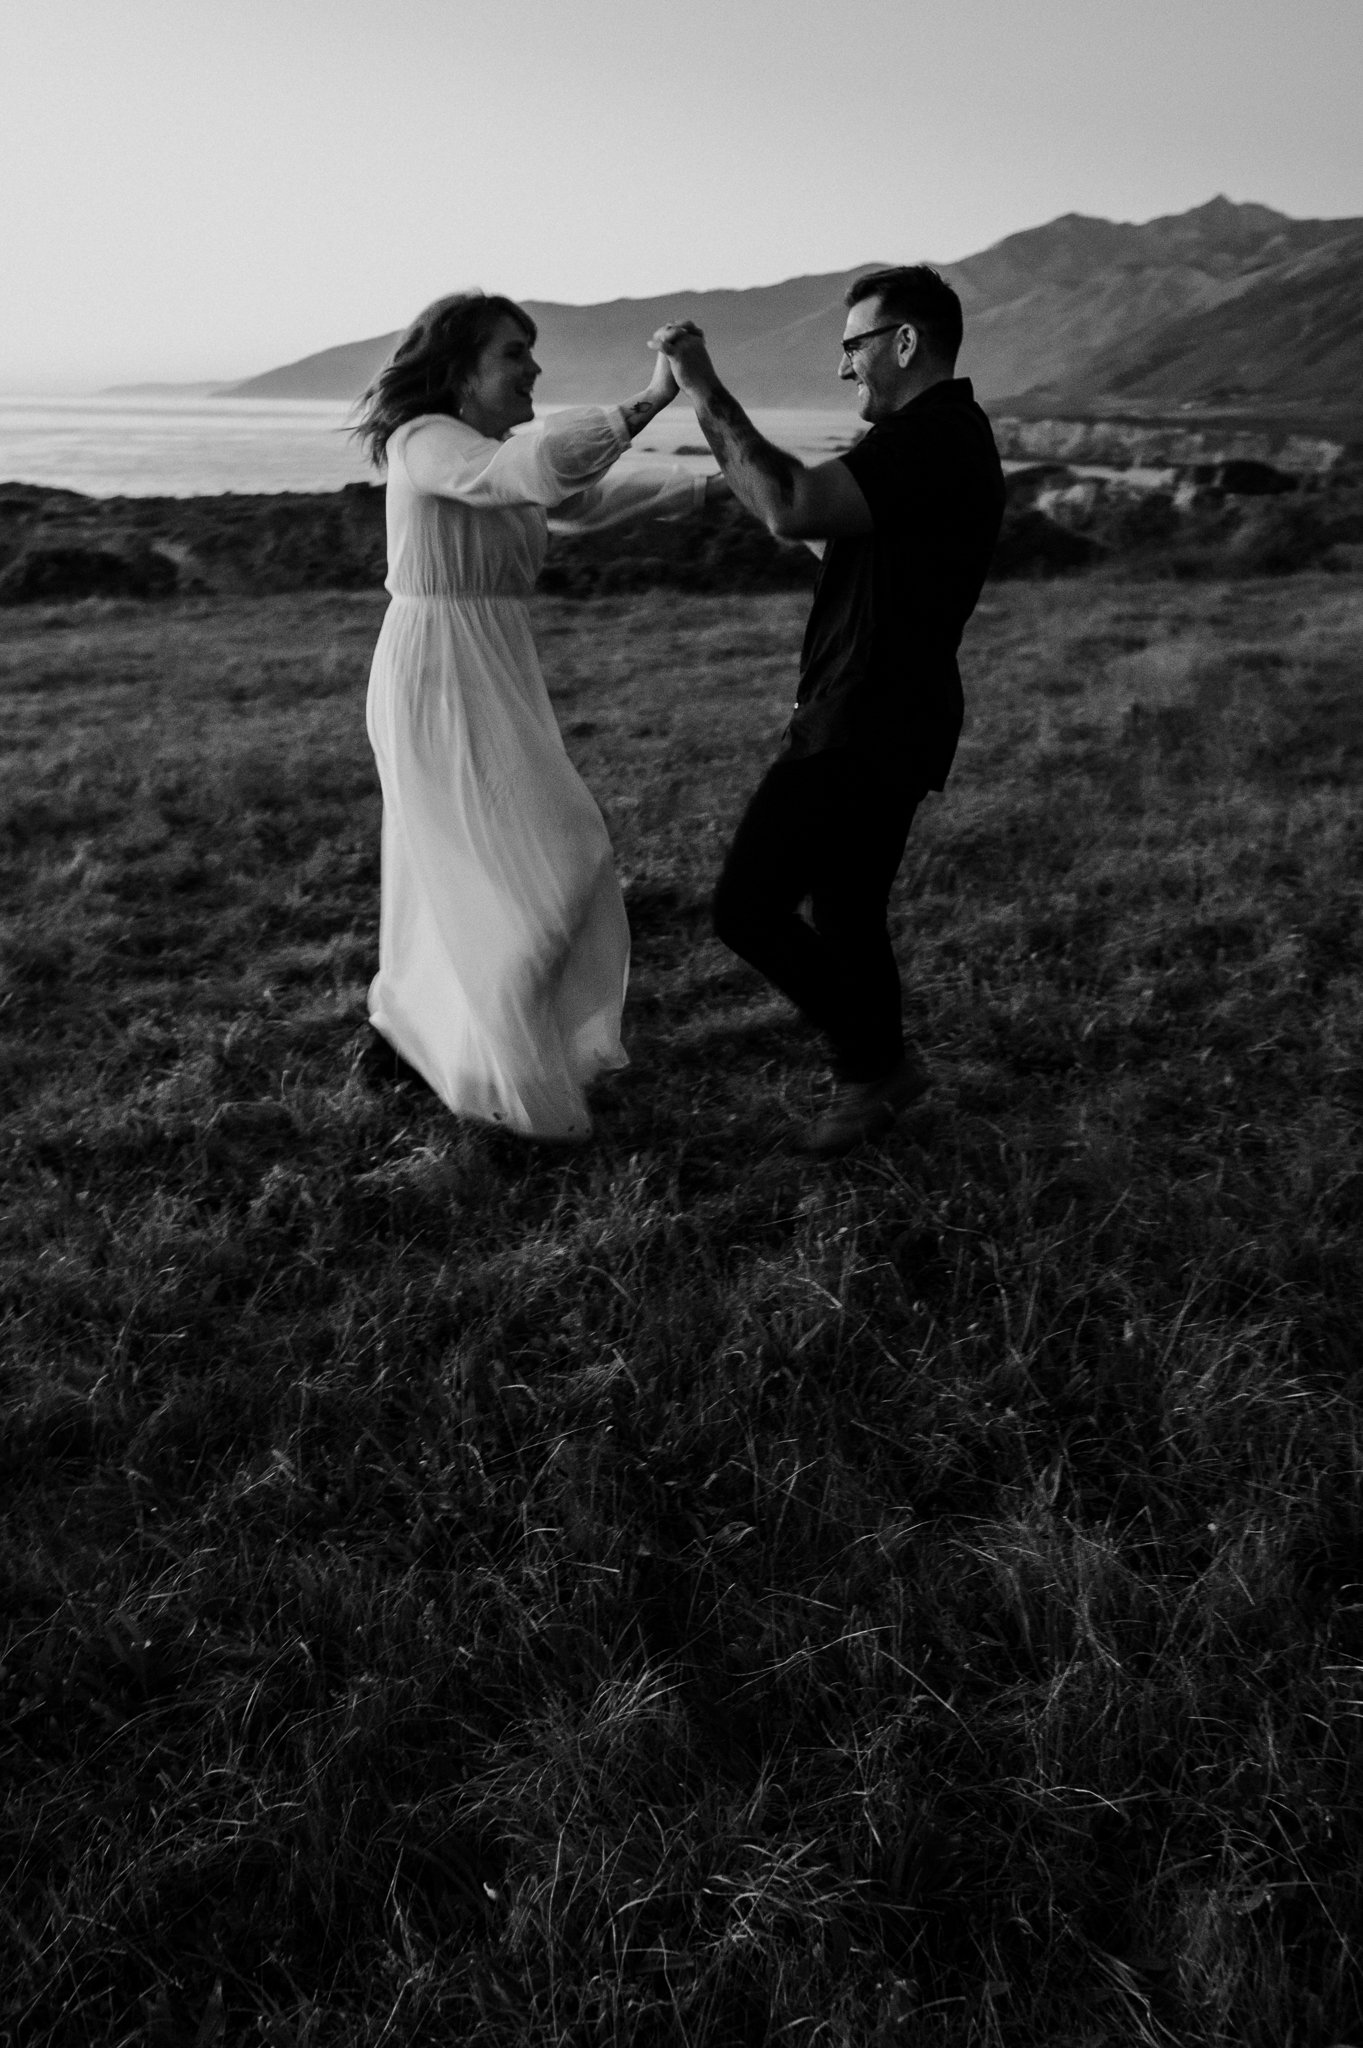 Couple-dancing-in-Meadow-Big-Sur-adventure-photography